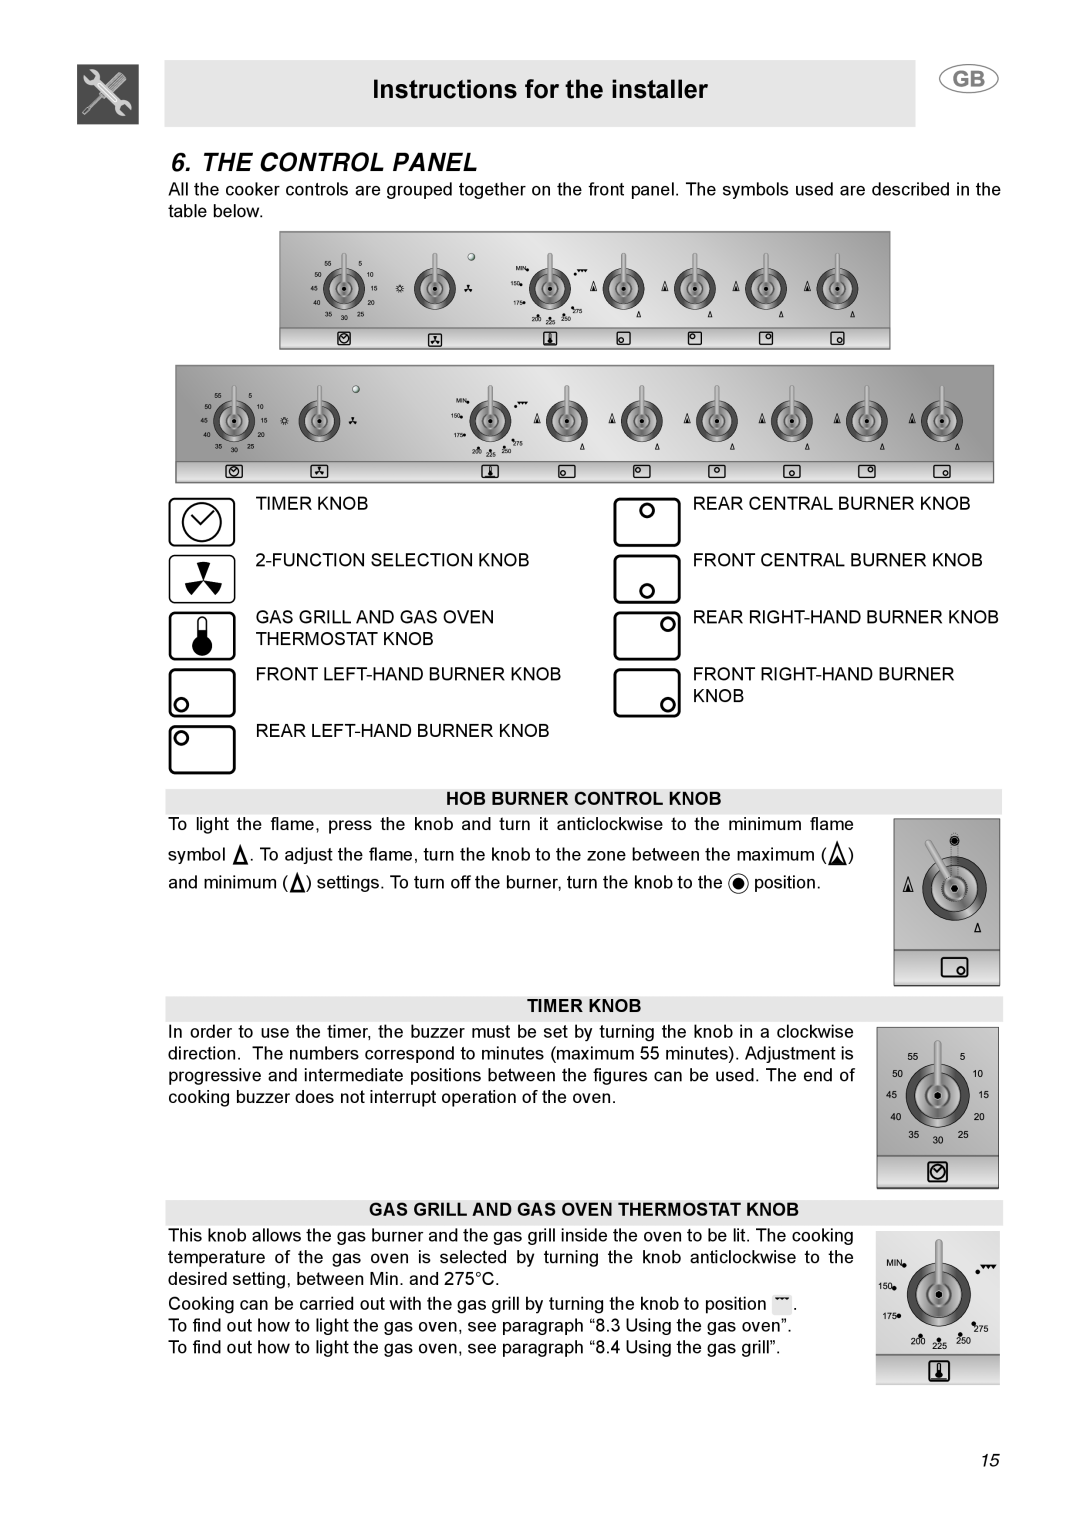 Smeg C9GGSSA manual The Control Panel, Instructions for the installer, Hob Burner Control Knob, Timer Knob 